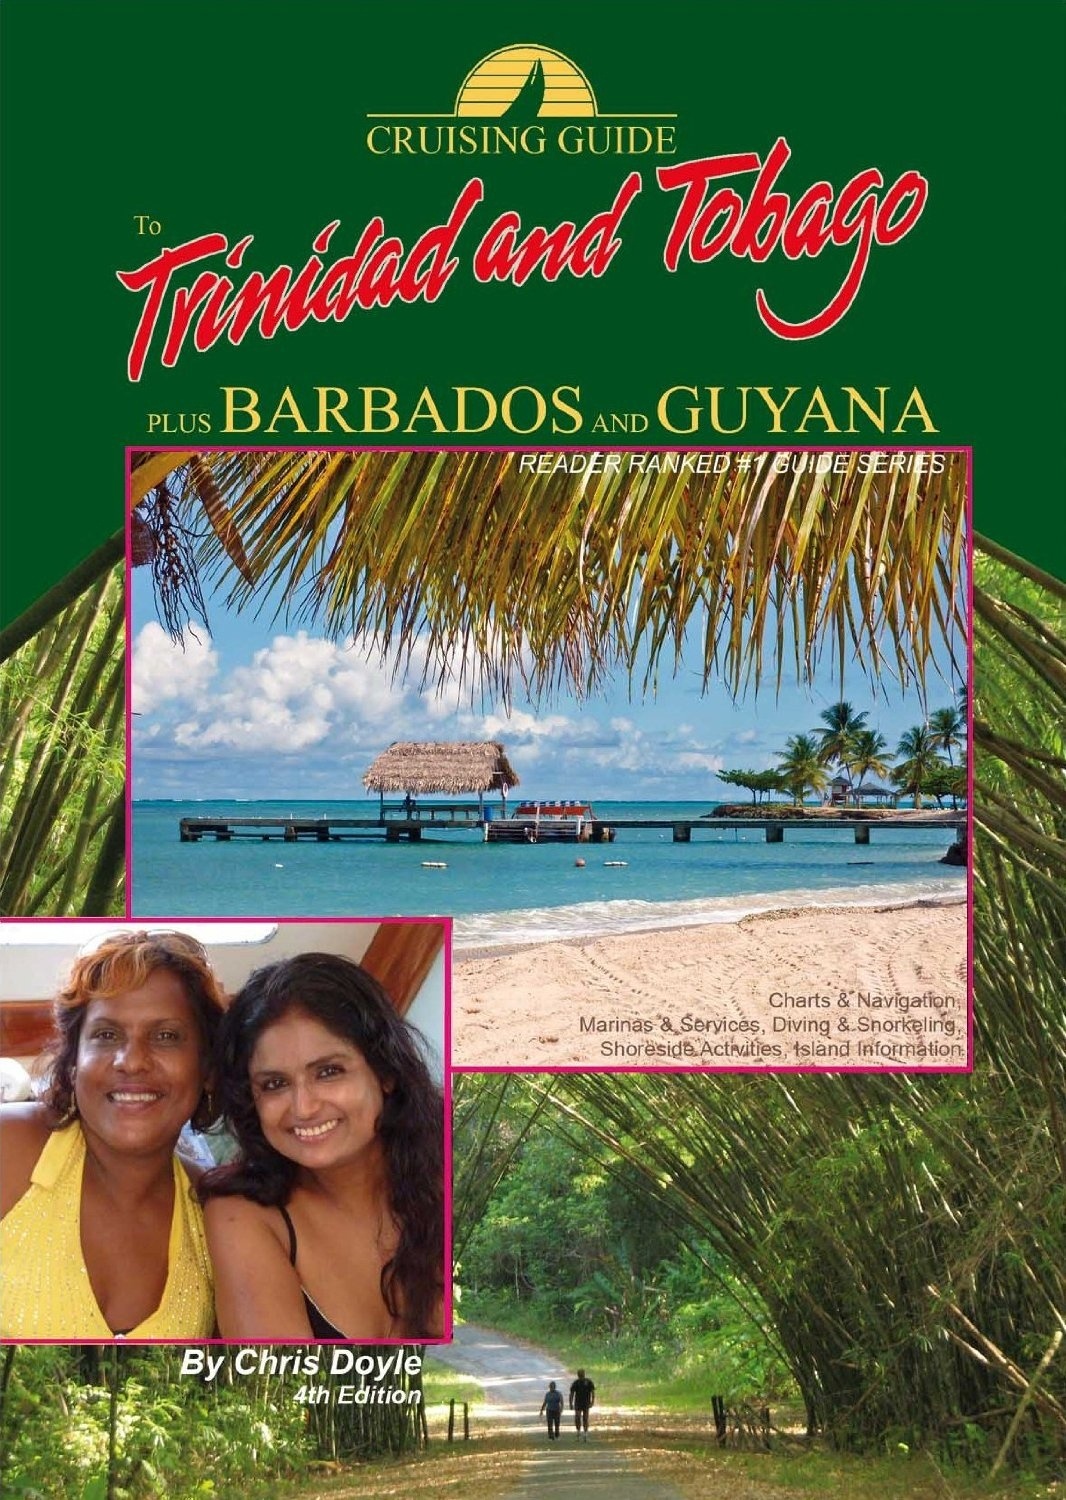 Cruising Guide to Trinidad and Tobago plus Barbados and Guyana.